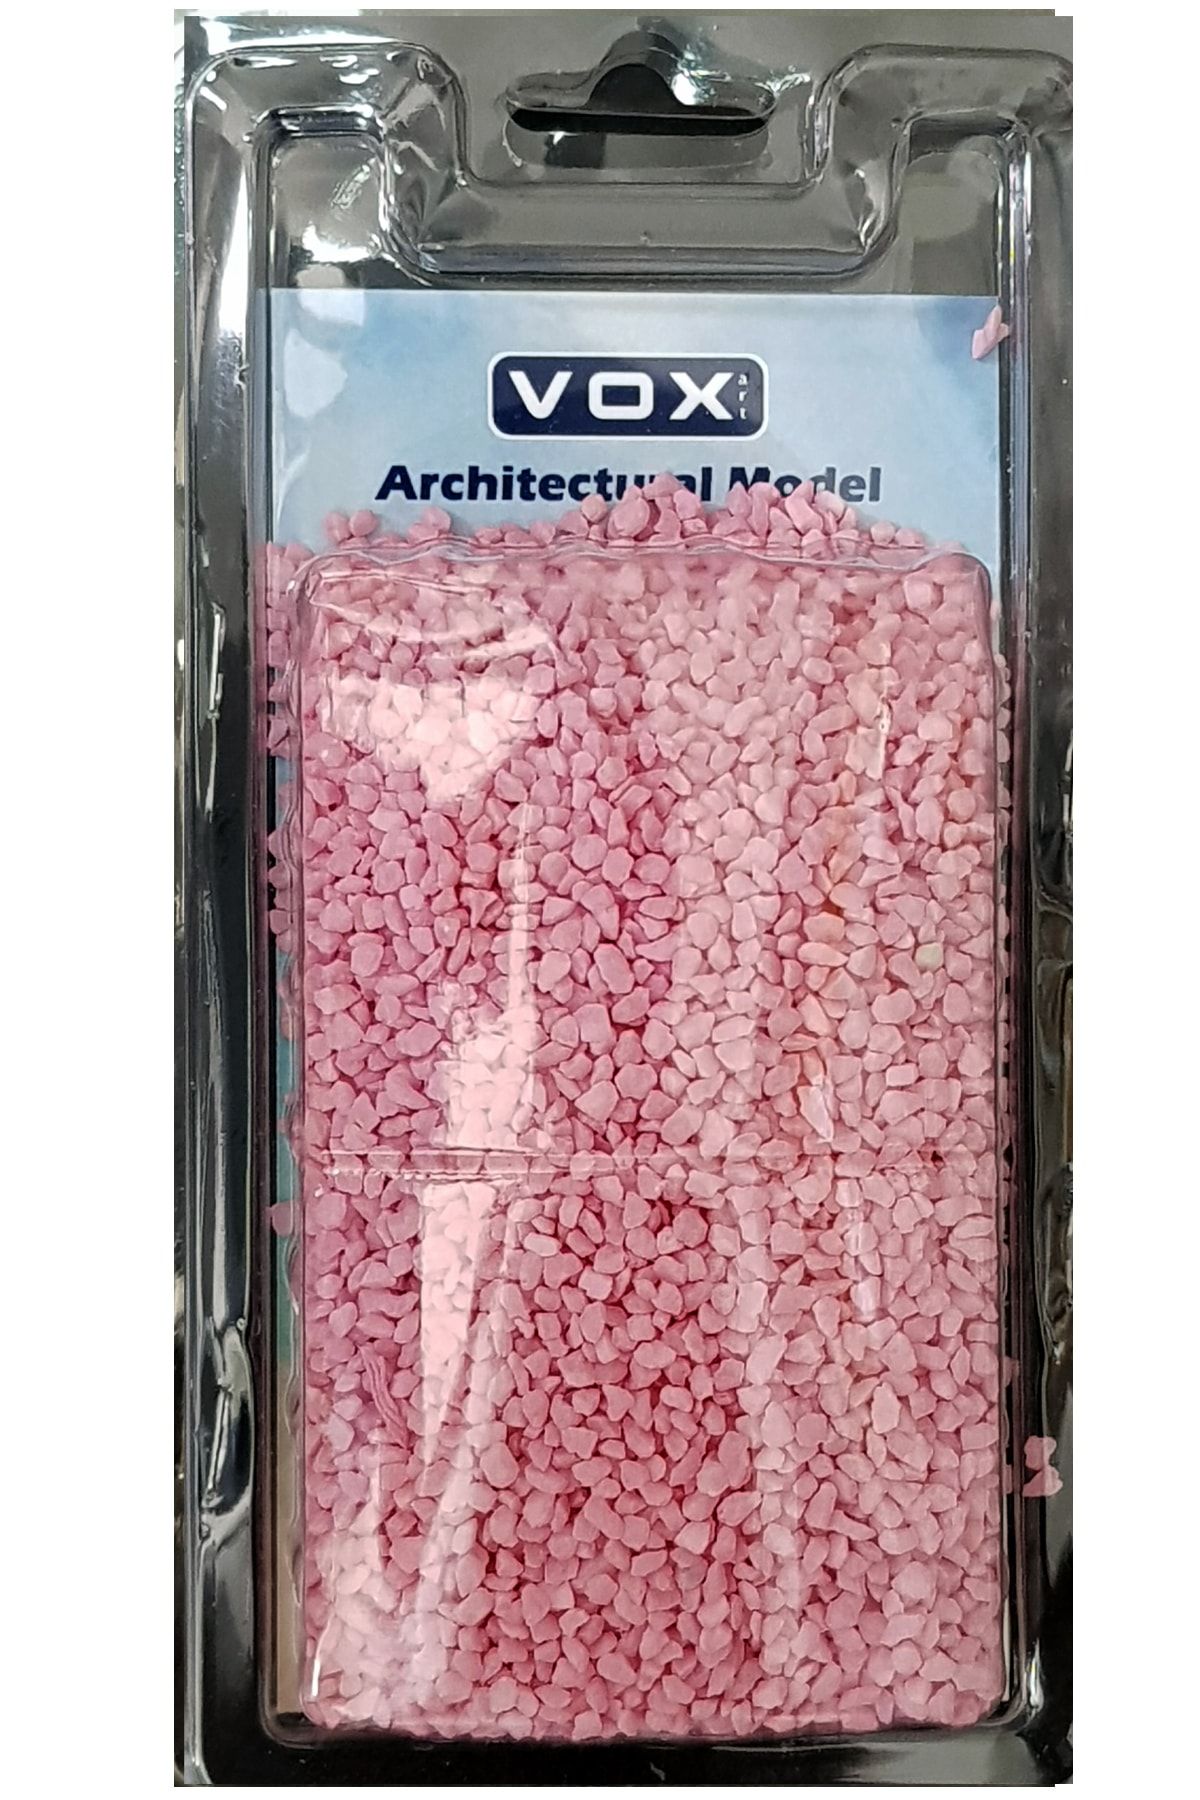 Vox Art Ince Çakıl Taşı - 230 Gr - Pembe